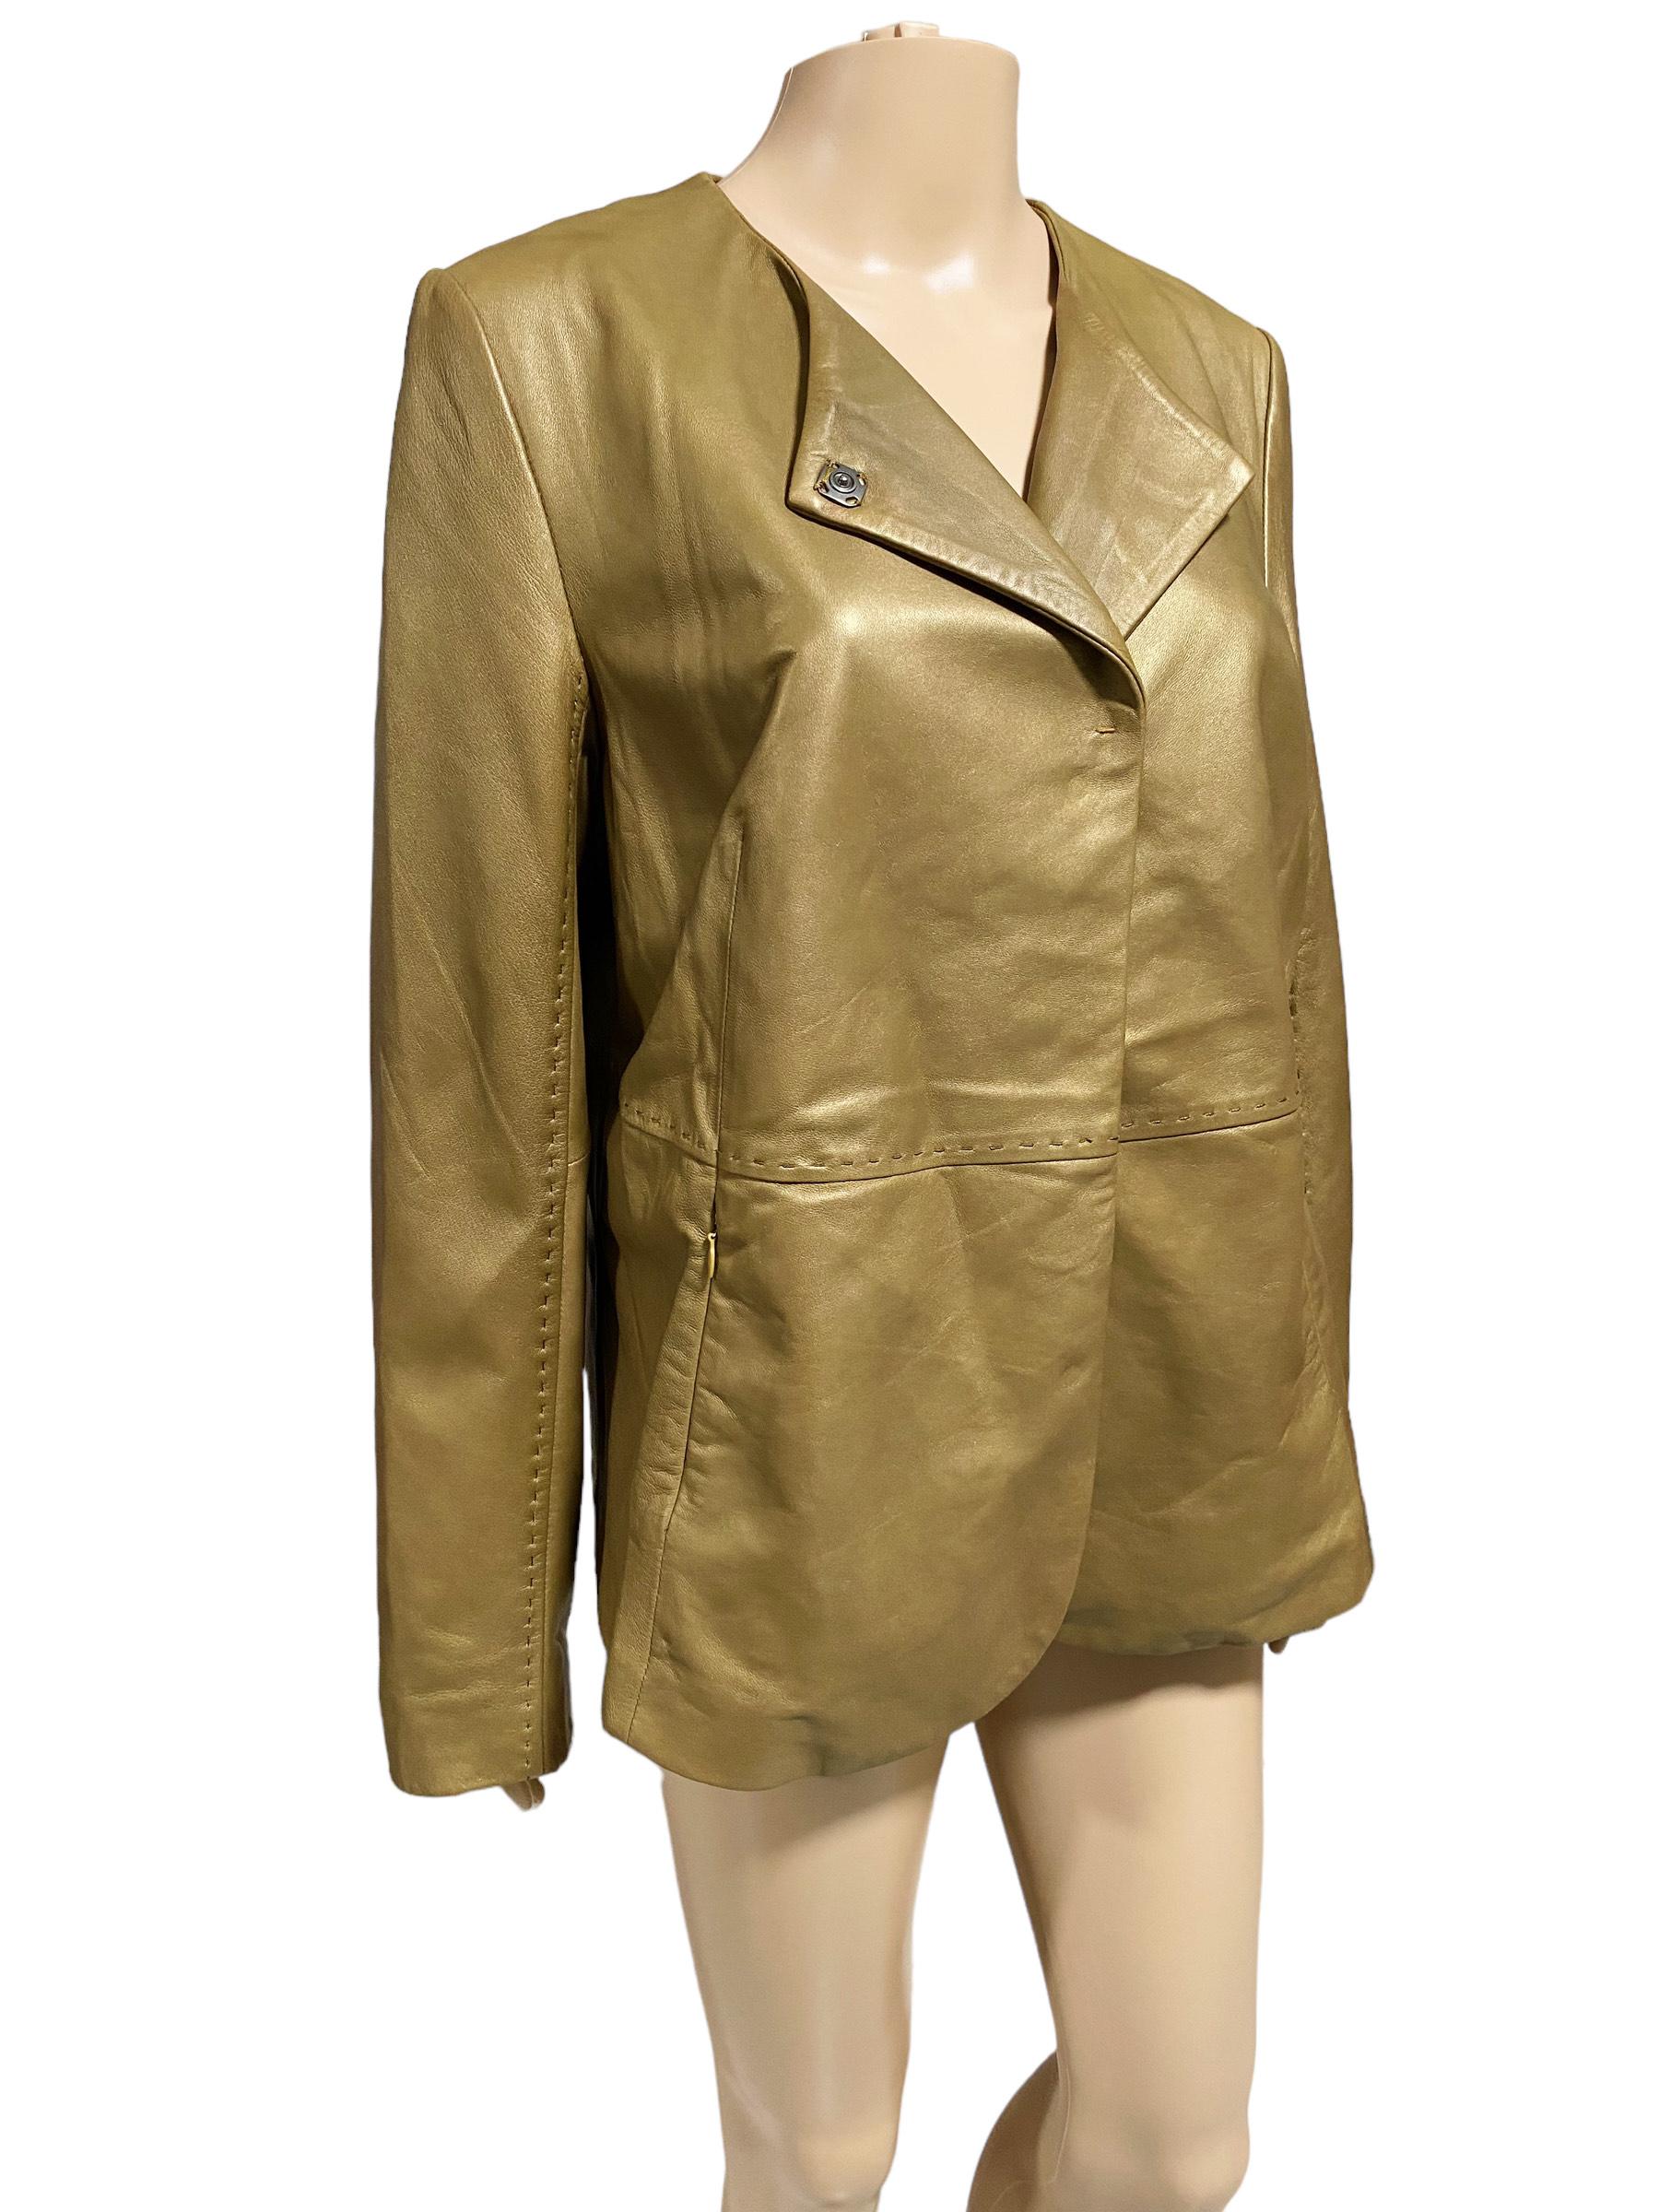 Marina Rinaldi x Max Mara Genuine Leather Jacket - Limited Edition For Sale 1